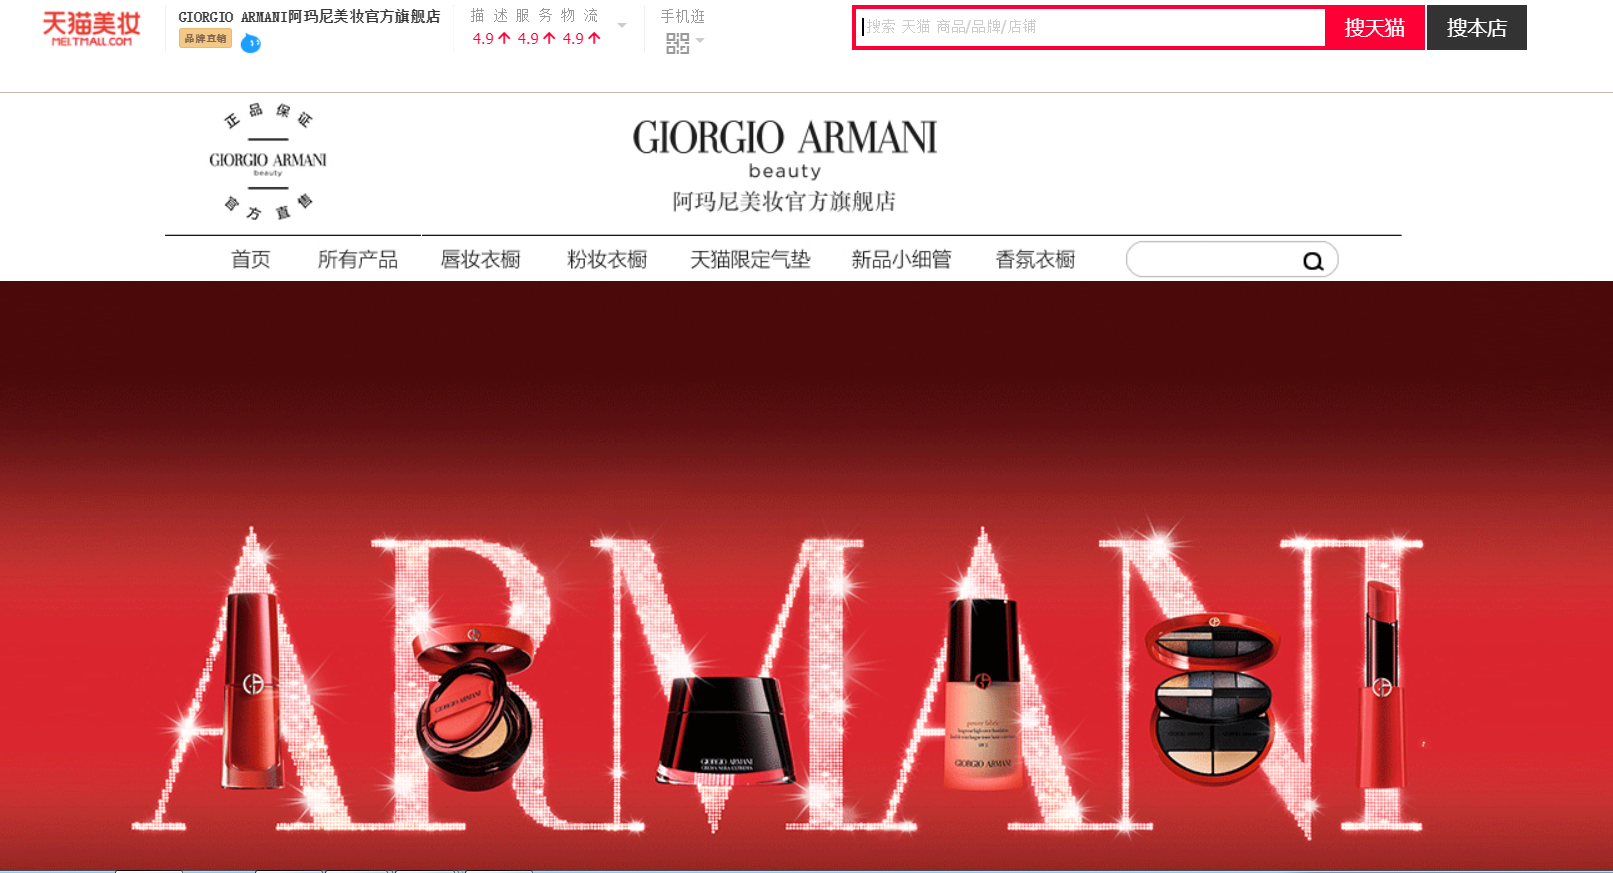 Giorgio Armani Beauty flagship store